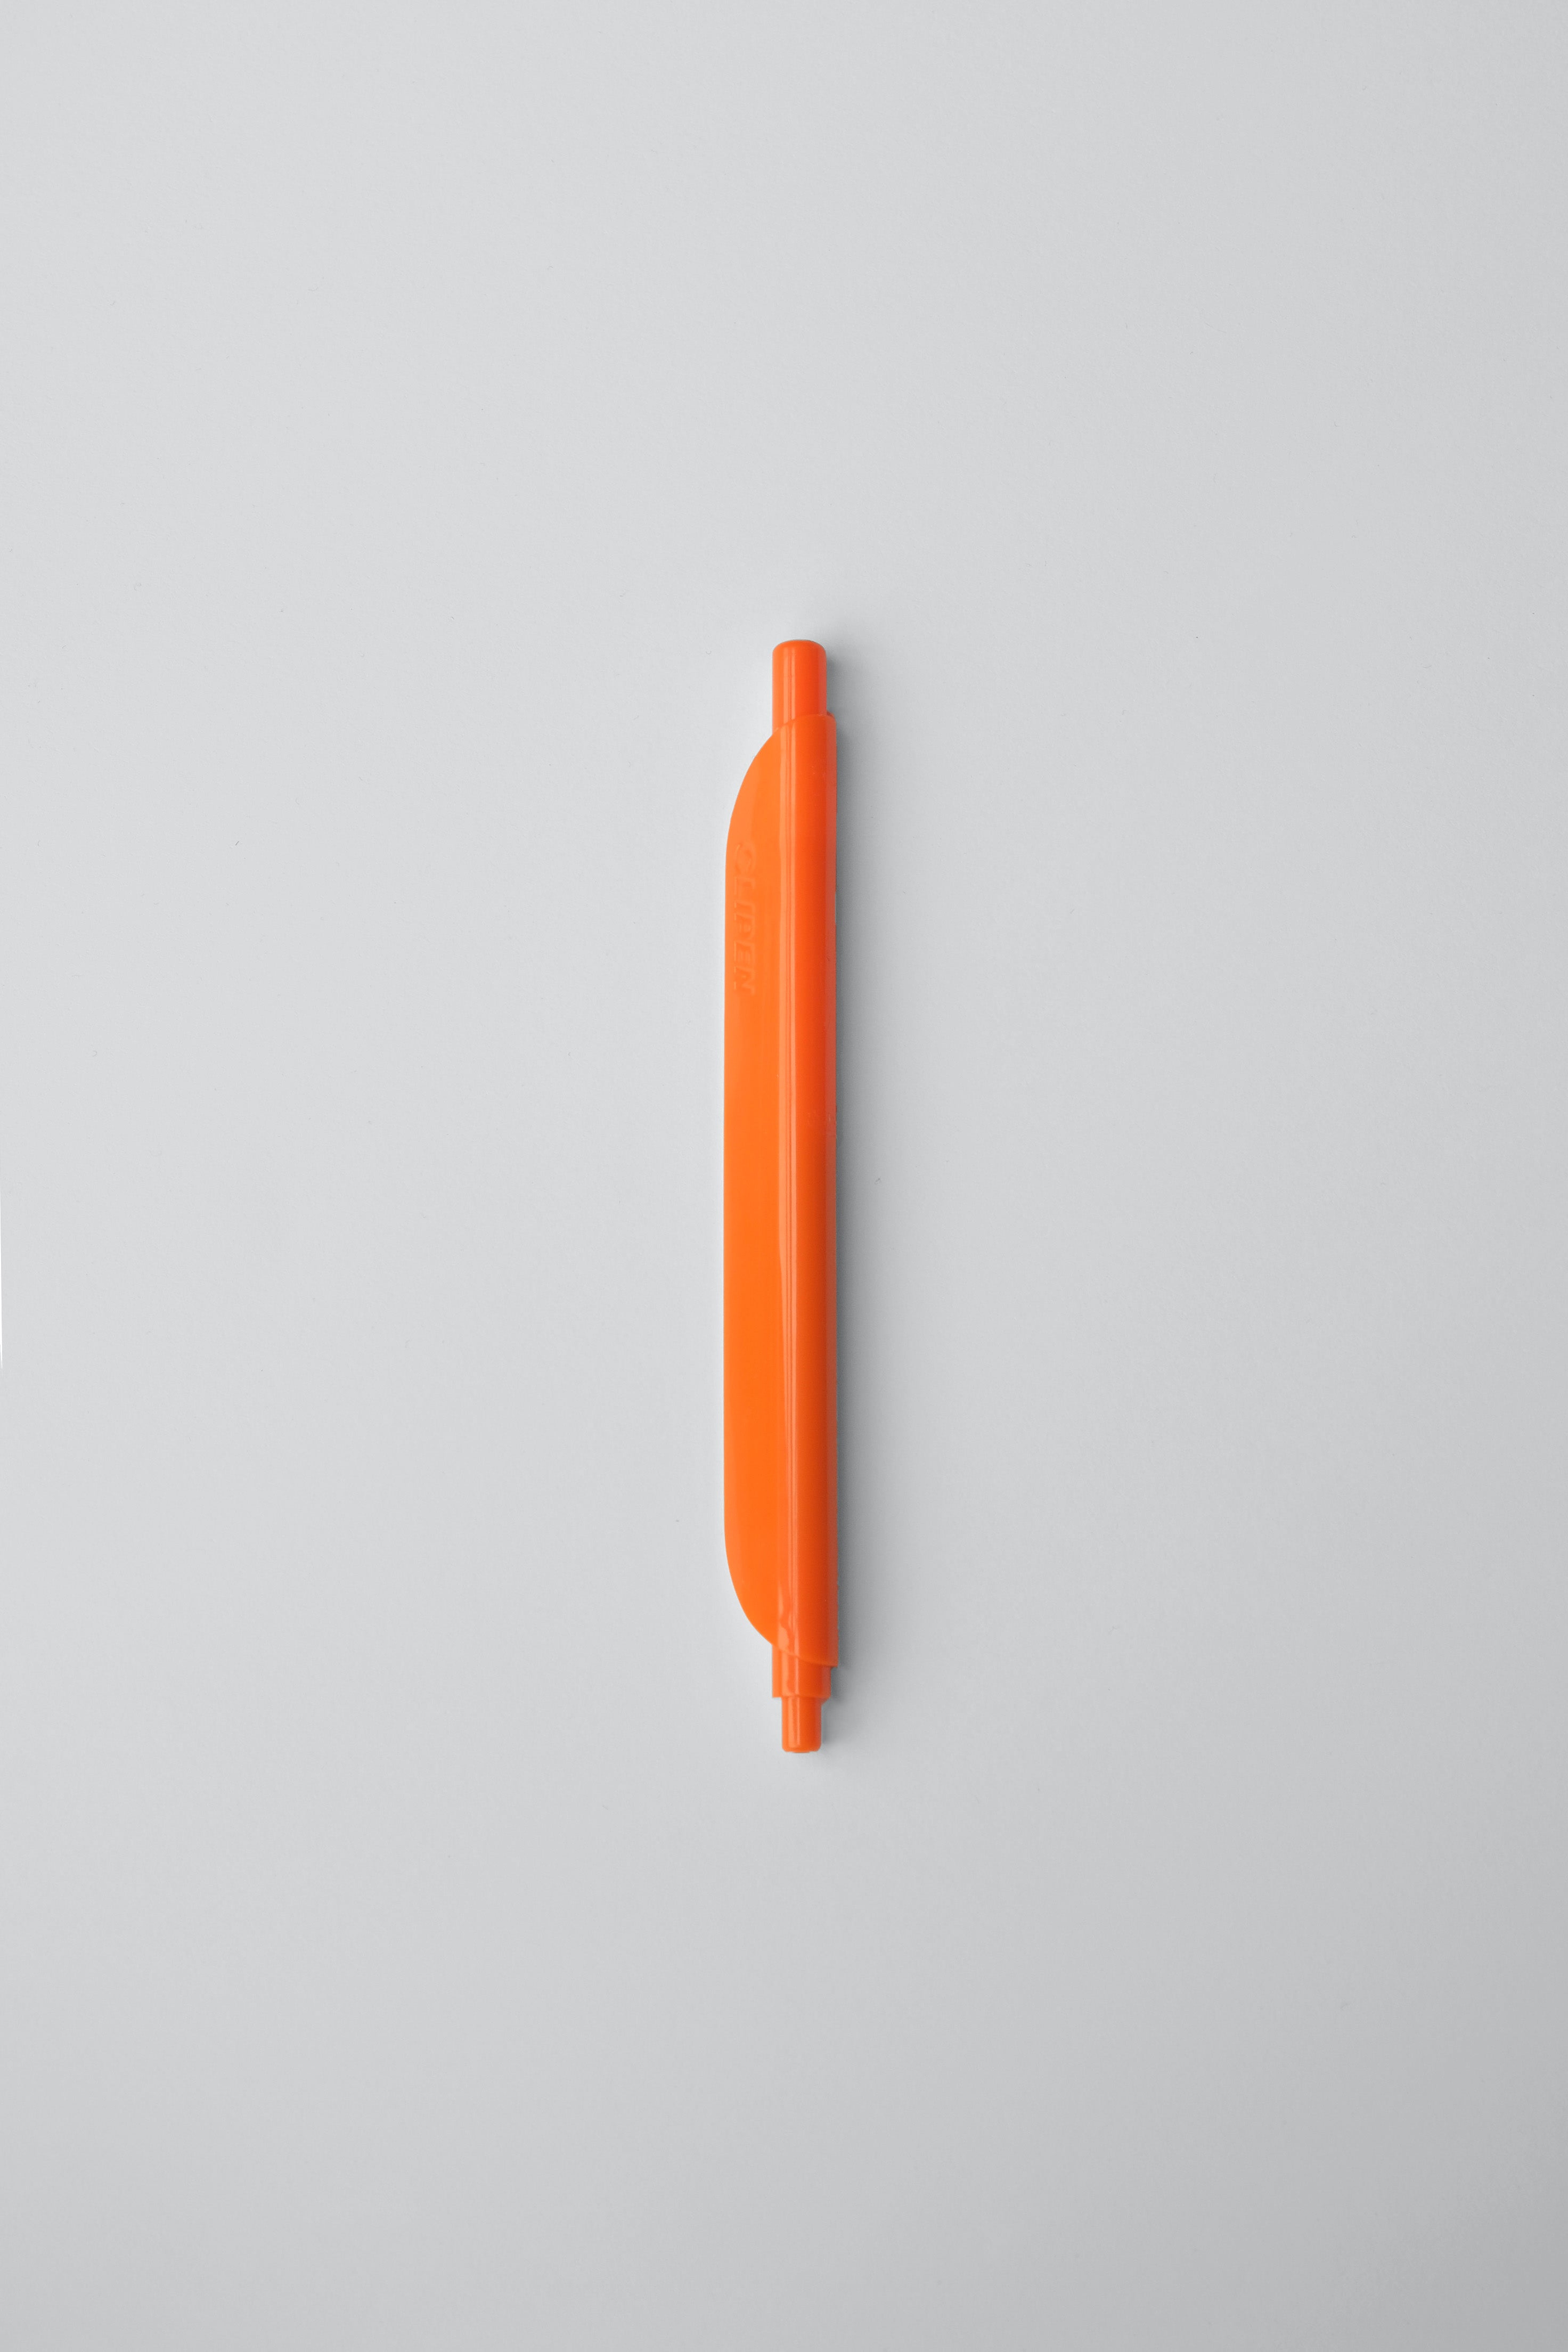 Clipen orange-Clipen-[interior]-[design]-KIOSK48TH